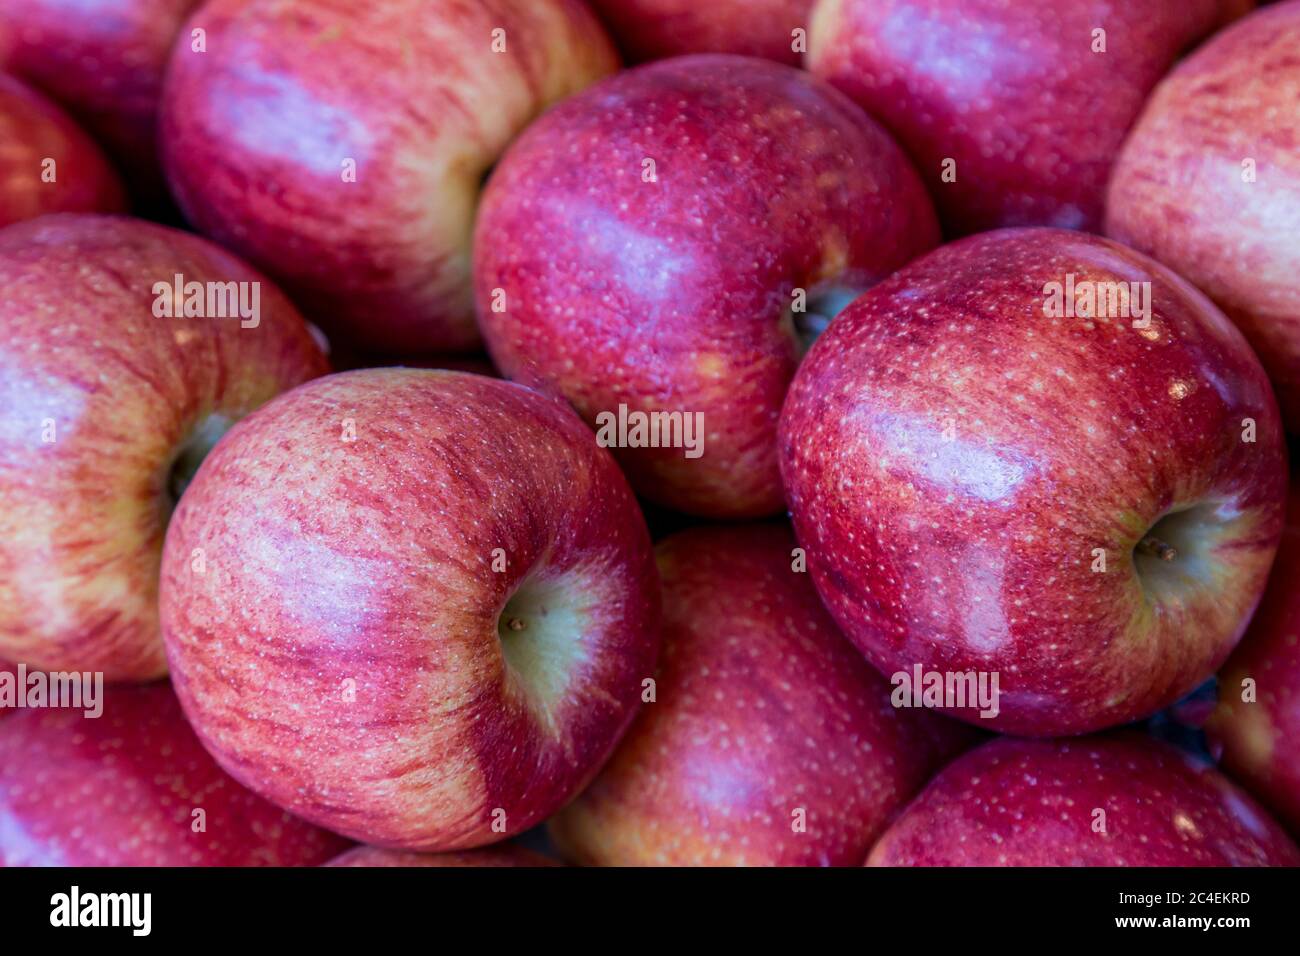 https://c8.alamy.com/comp/2C4EKRD/a-display-of-red-apples-for-sale-on-a-market-stall-2C4EKRD.jpg